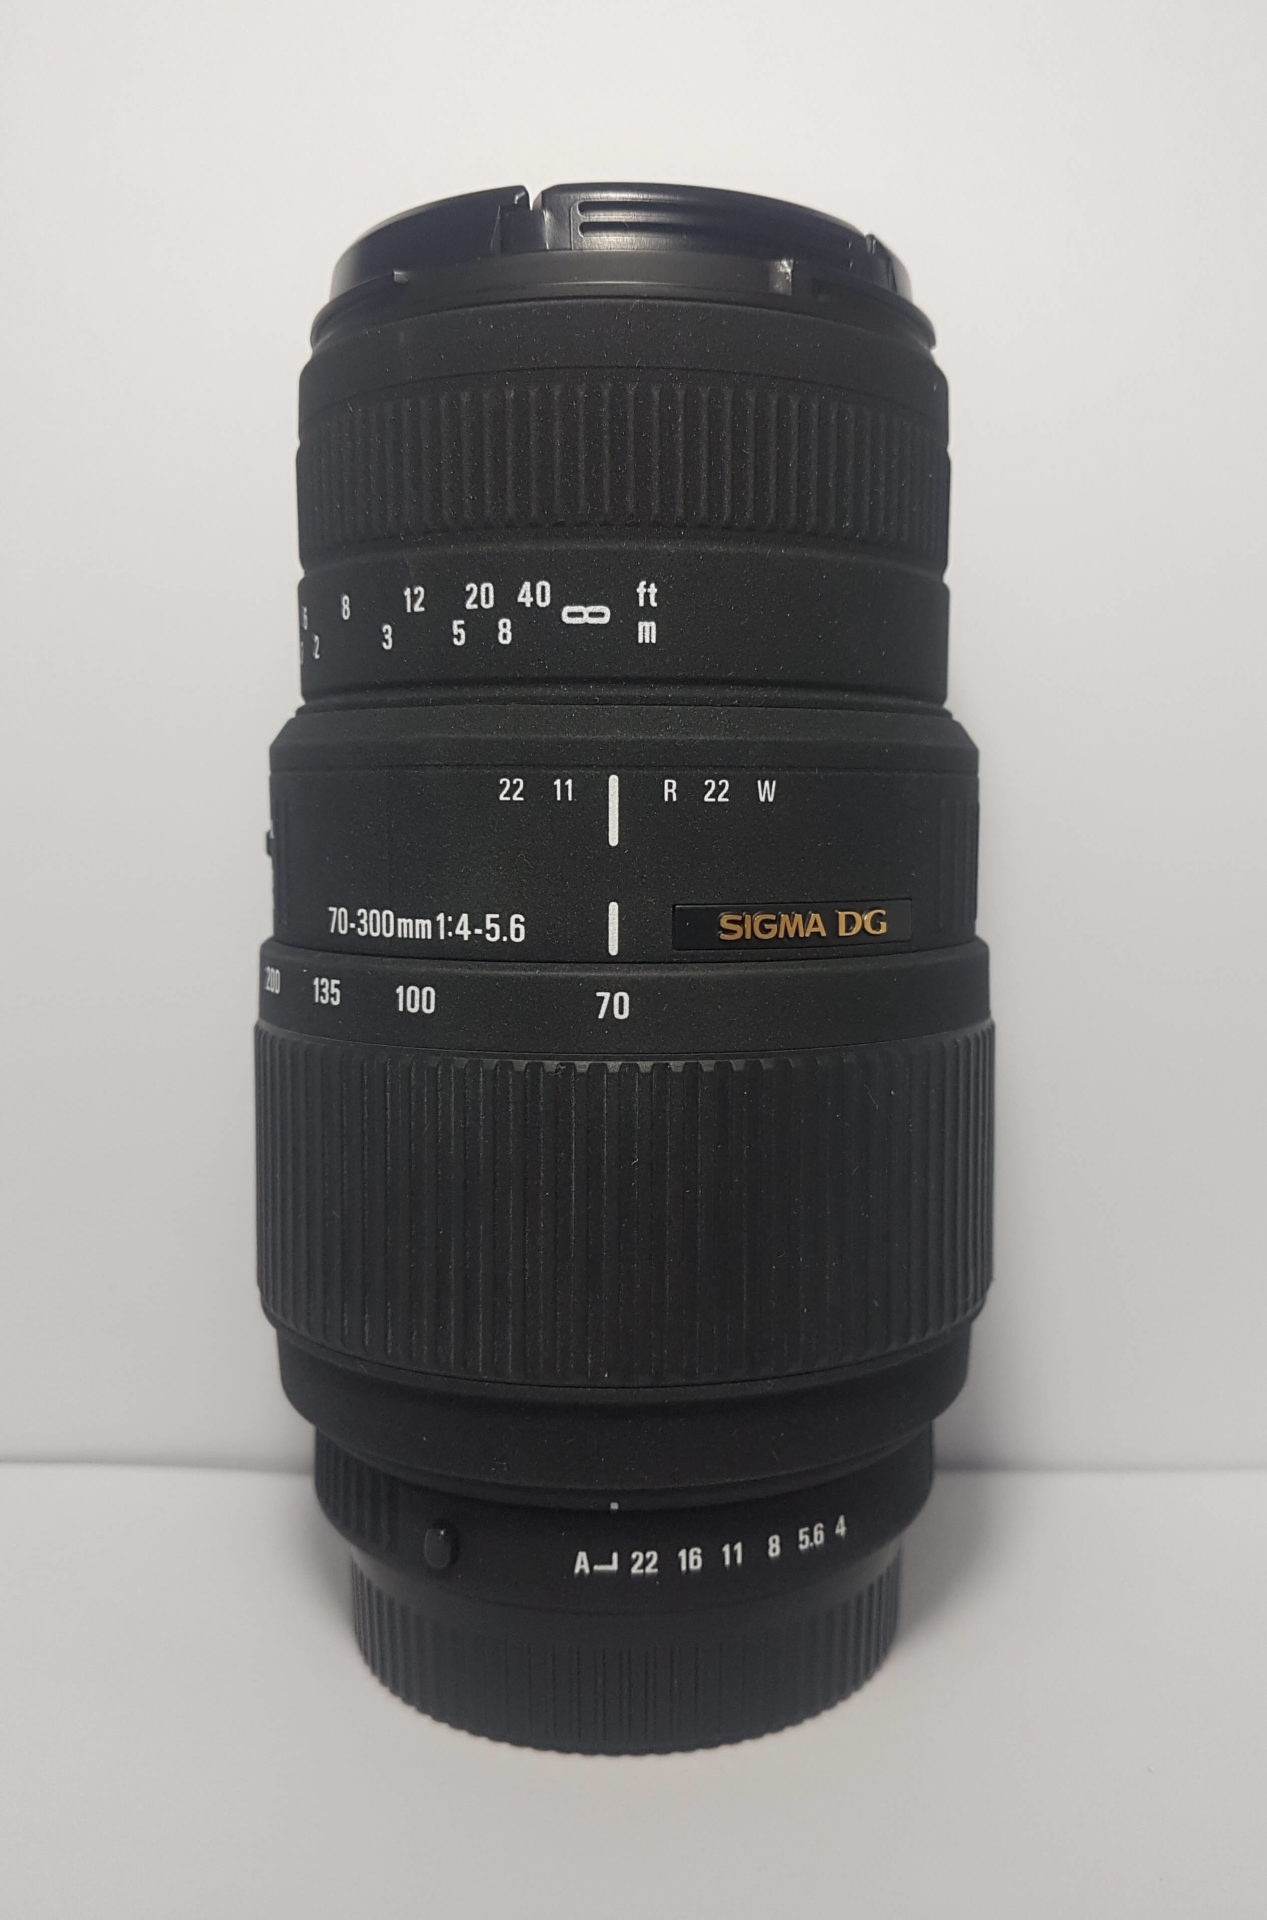 Sigma 70-300mm f4-5.6 DG Macro Pentax Lens